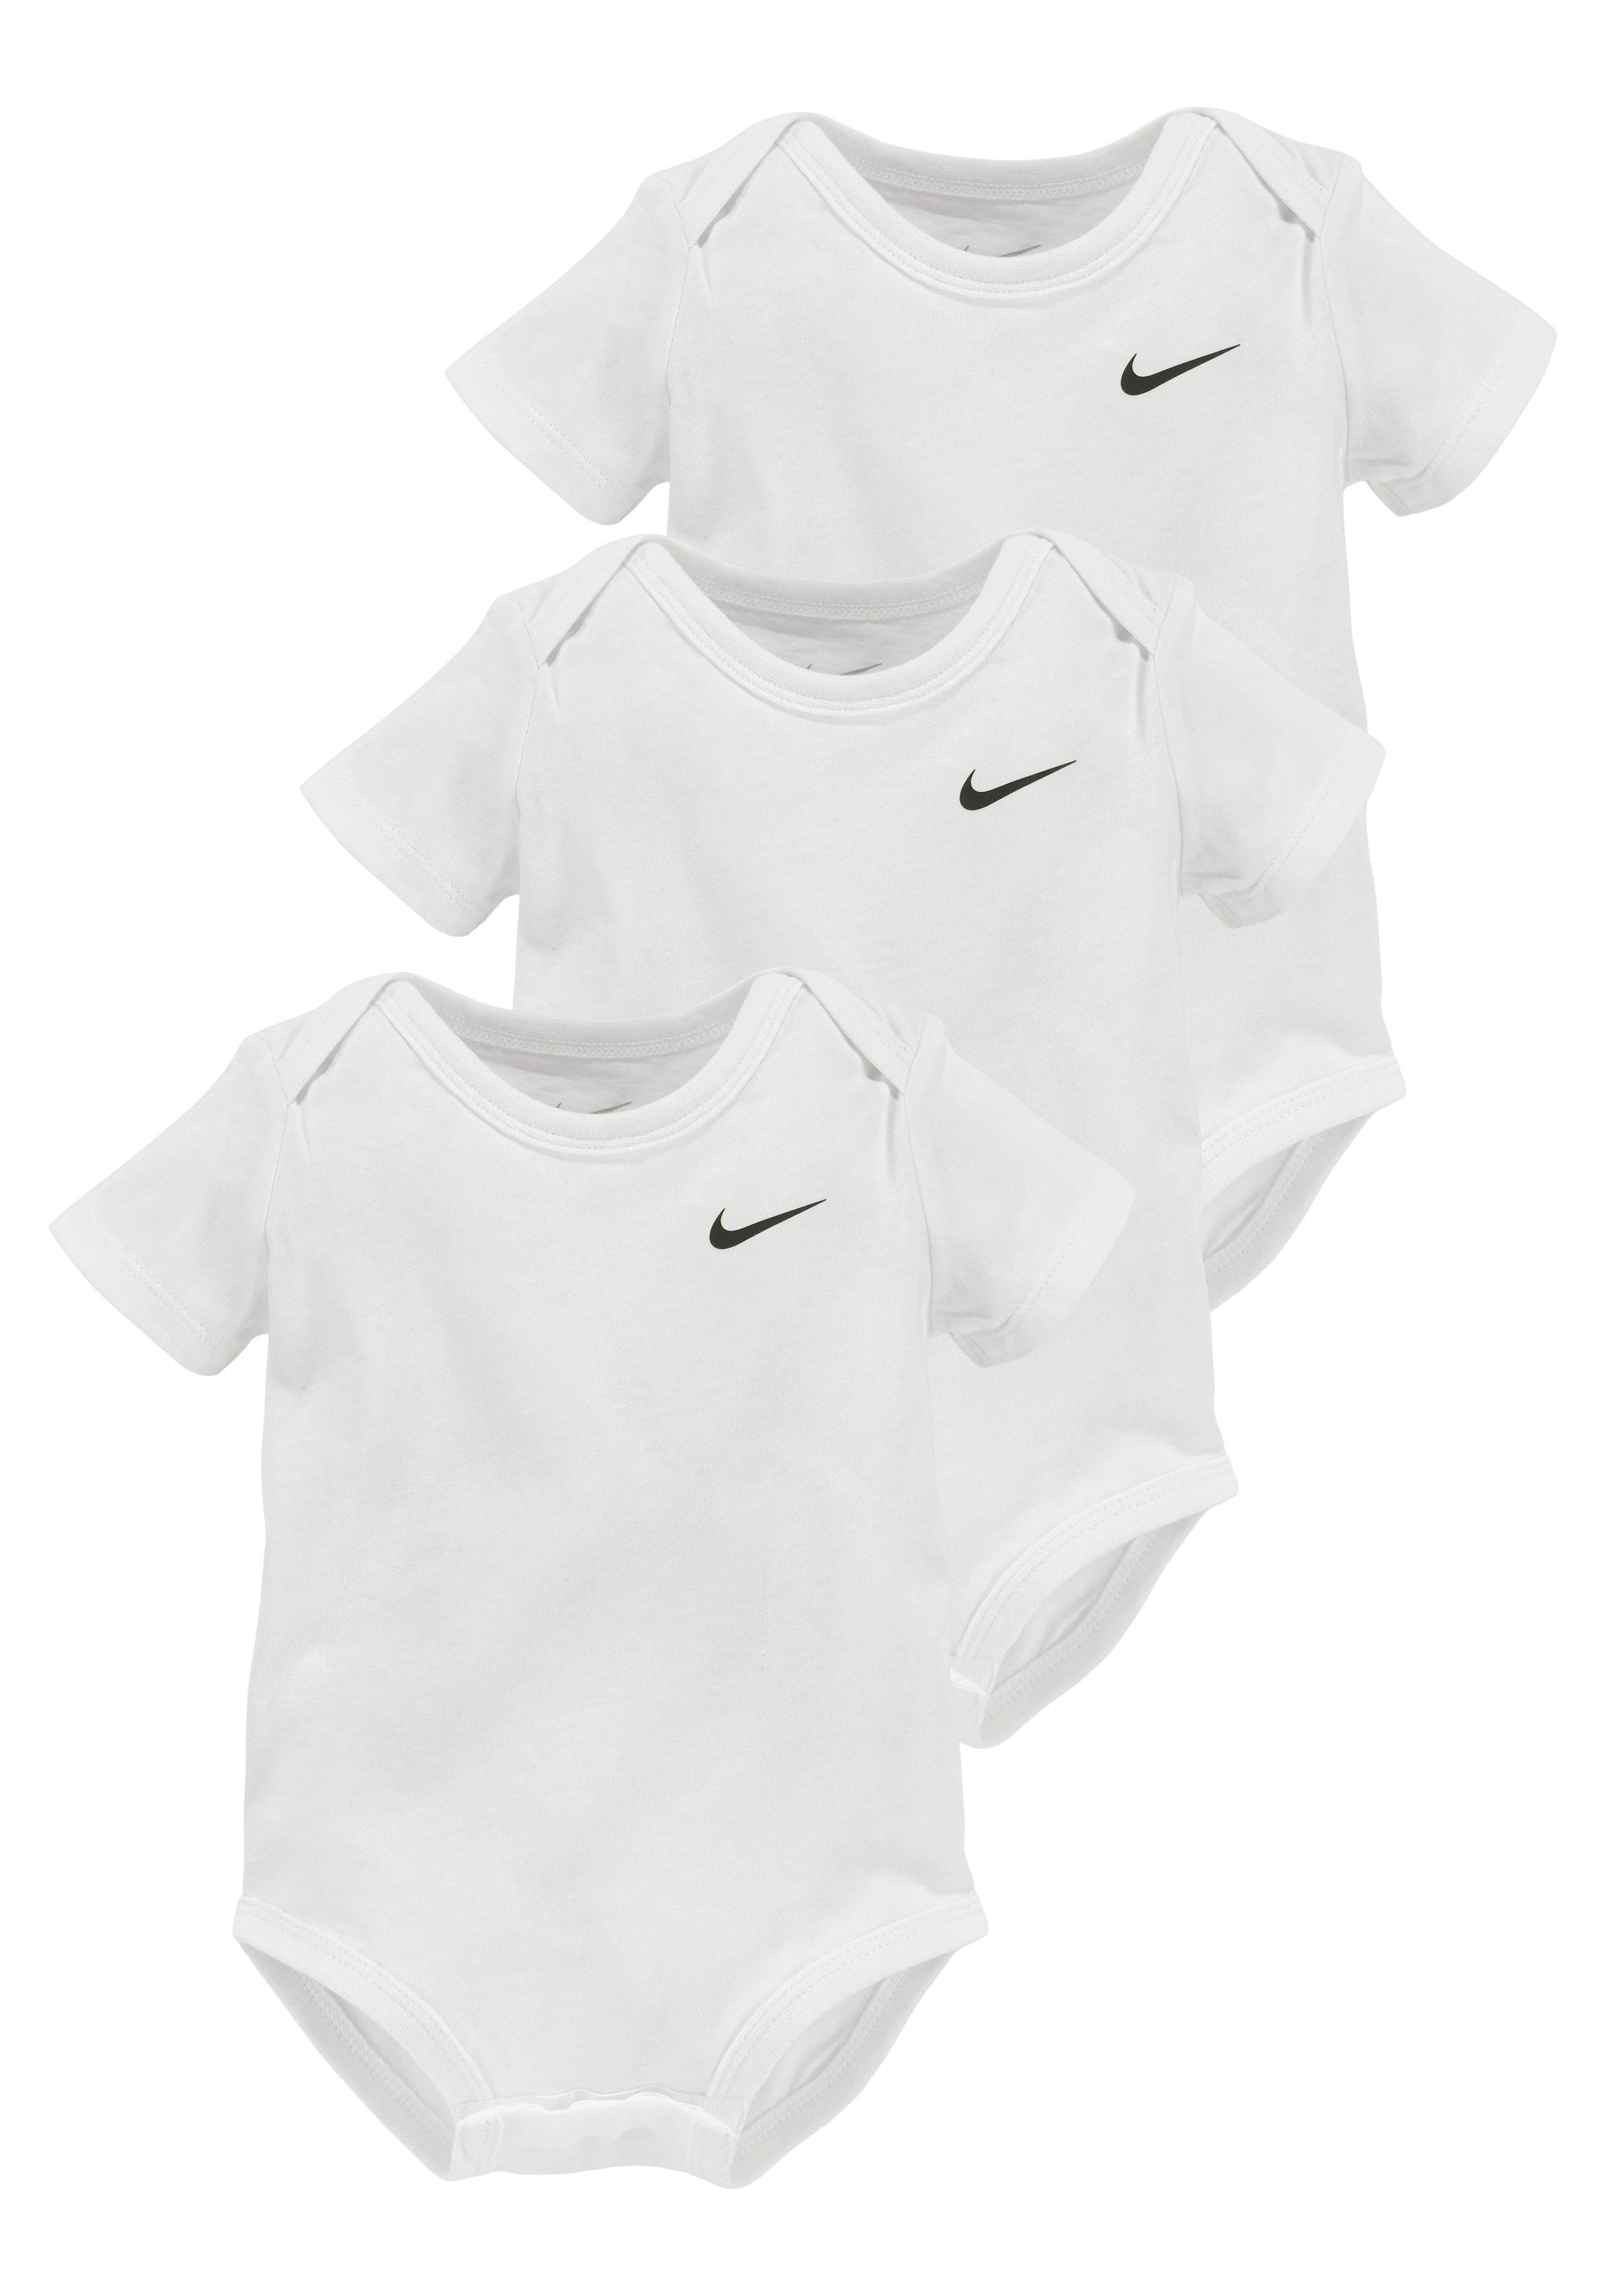 Nike Sportswear BODYSUIT NKB weiß 3-tlg) Body SWOOSH (Packung, 3PK